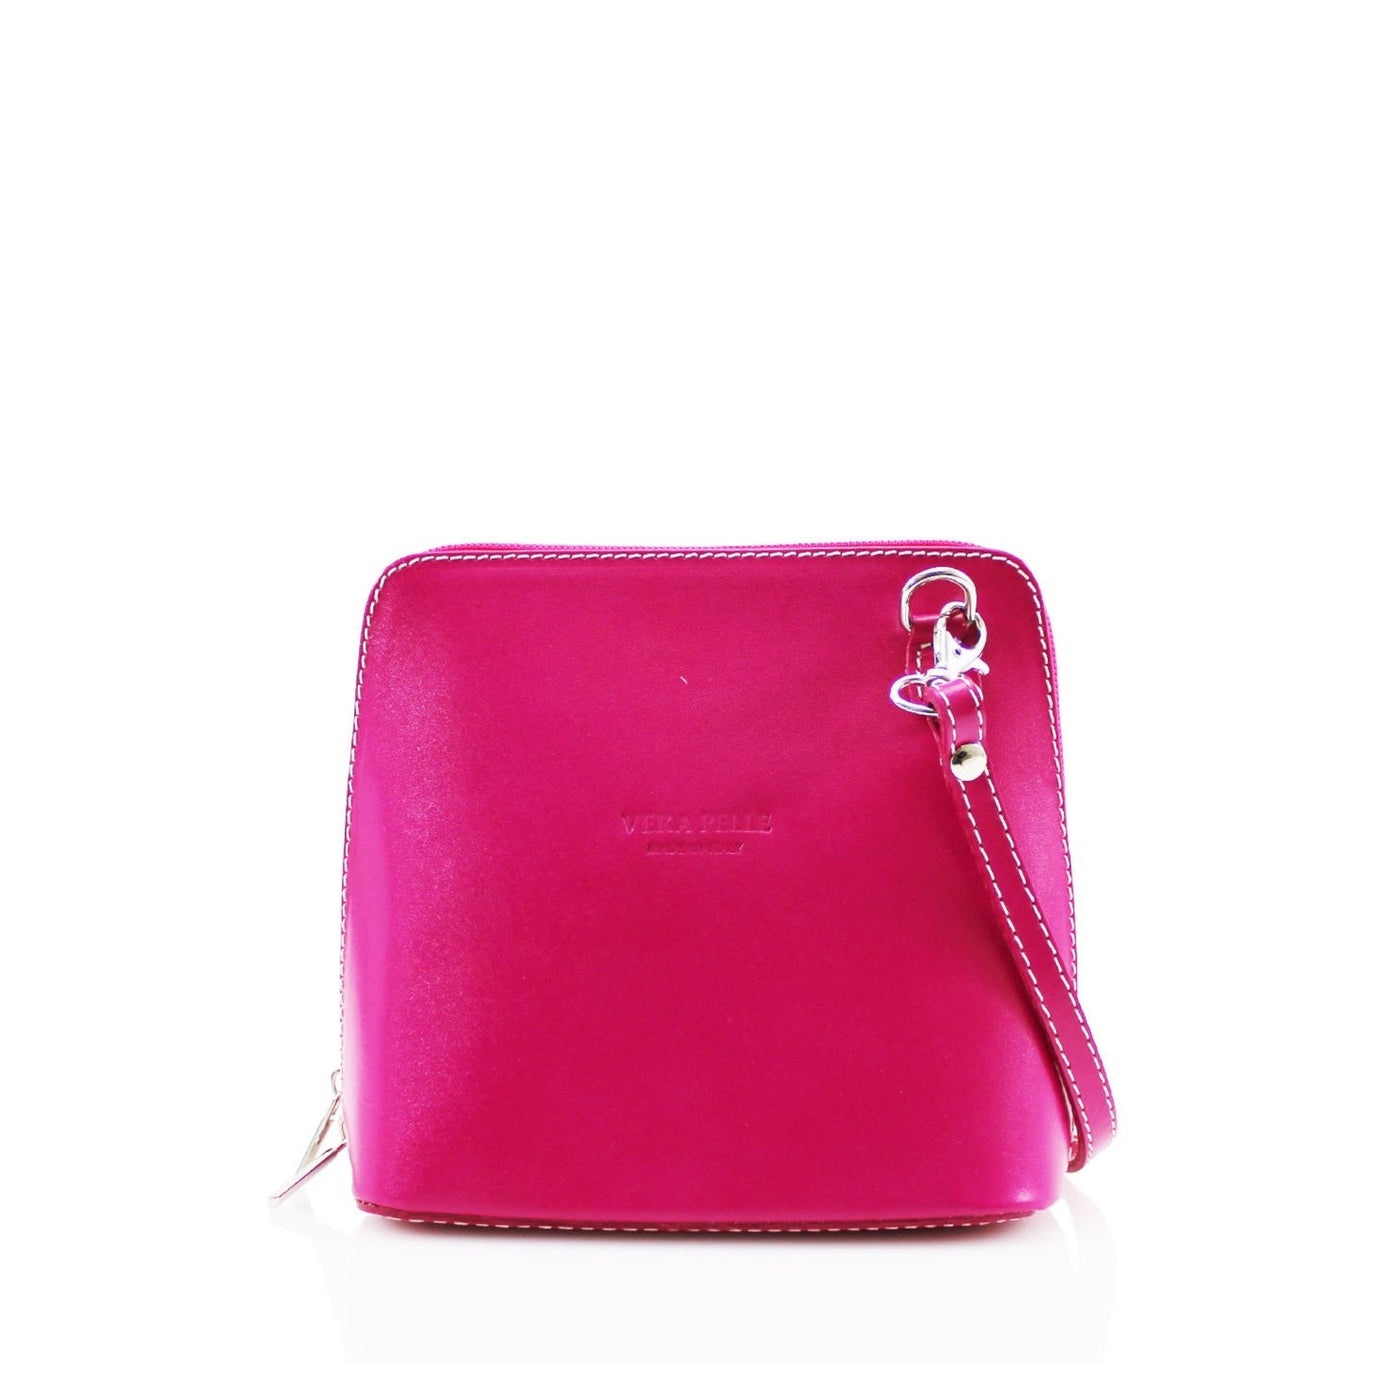 Leather Mini Crossbody Handbag - Fuchsia Pink